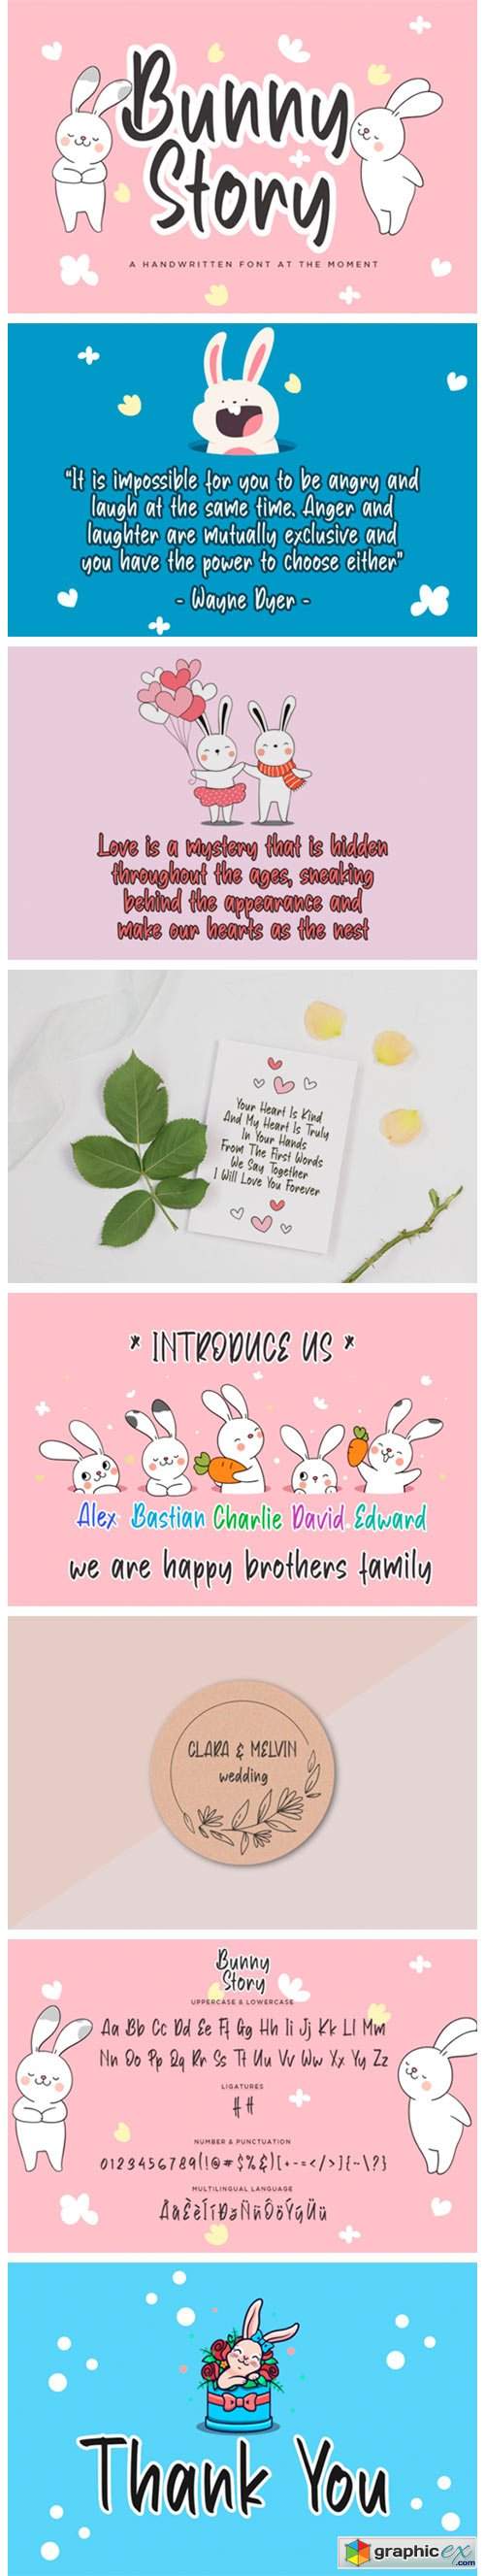  Bunny Story Font 